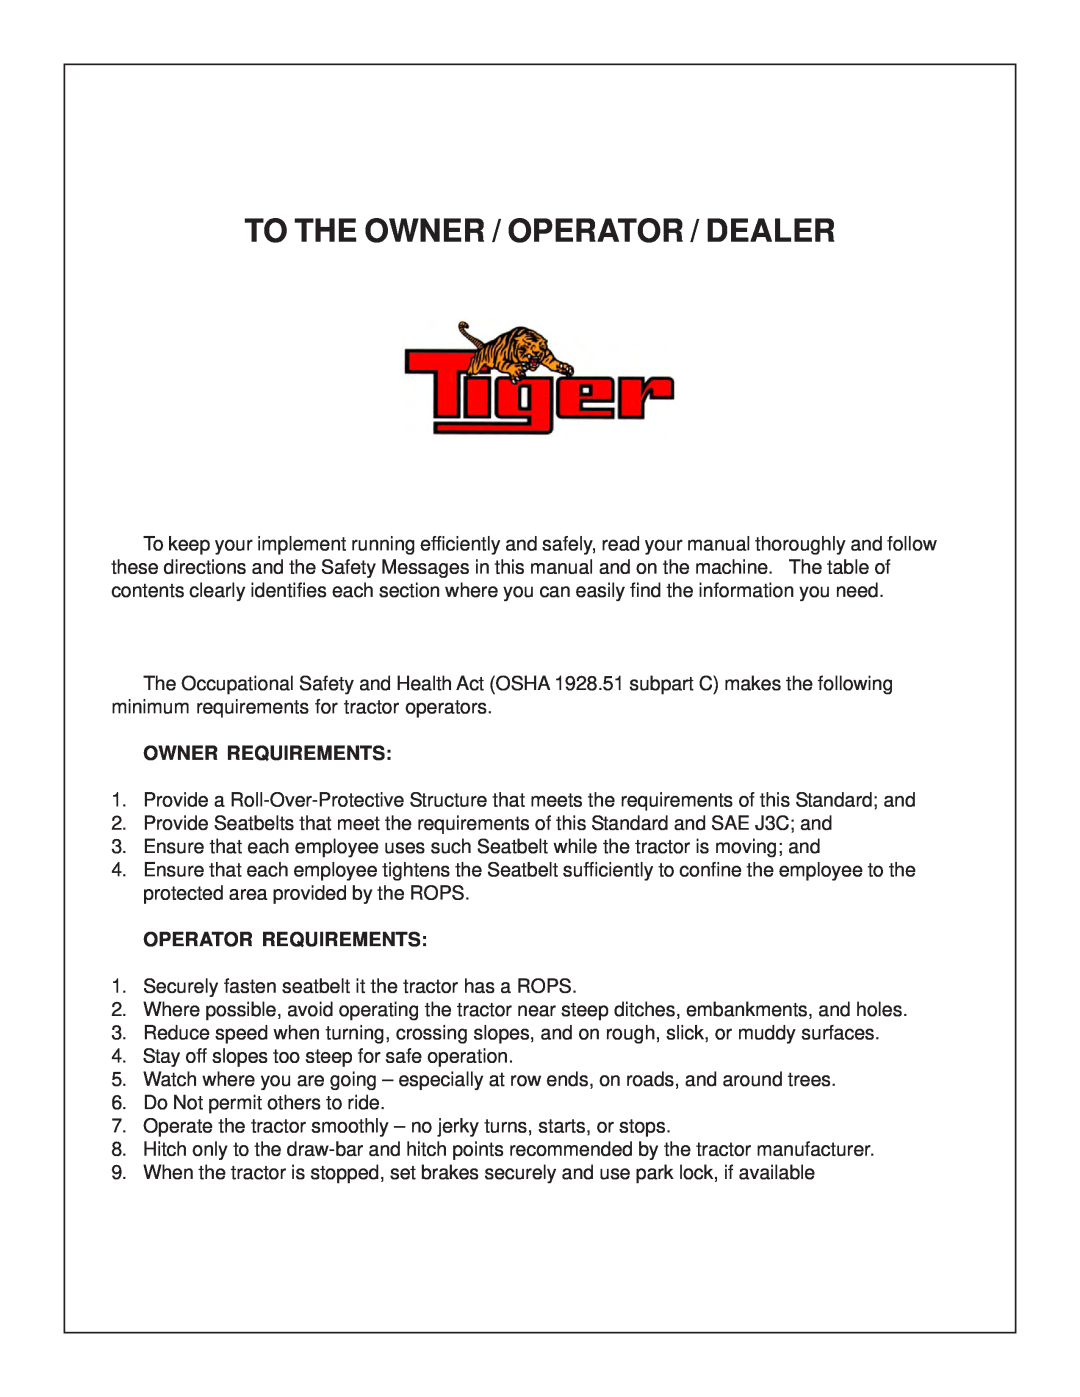 Tiger Products Co., Ltd 5083E, 5093E, 5101E To The Owner / Operator / Dealer, Owner Requirements, Operator Requirements 